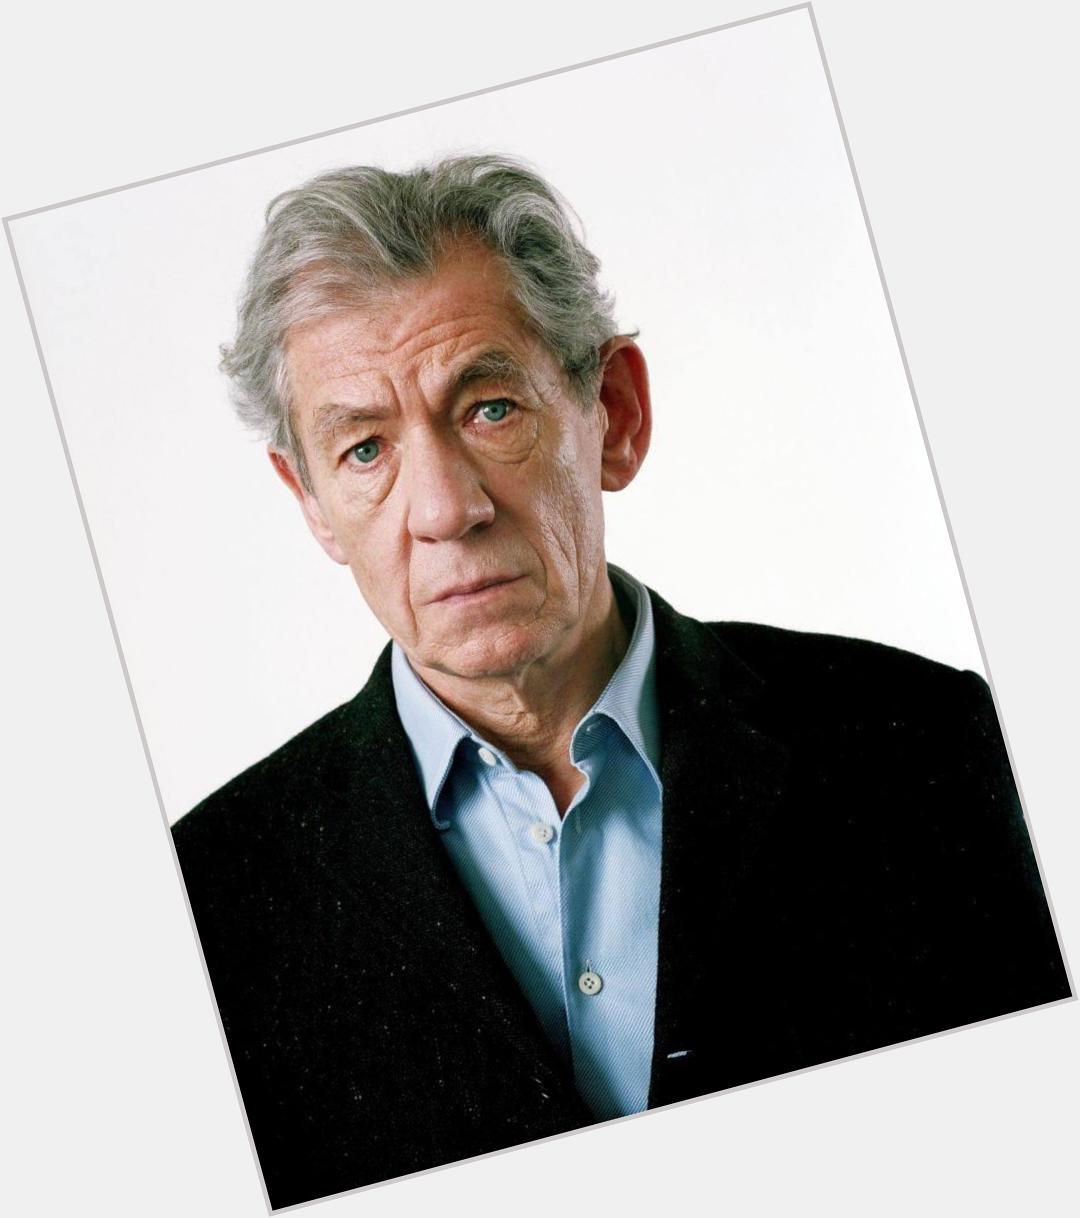 Happy Birthday to Sir Ian McKellen who turns 80 today 